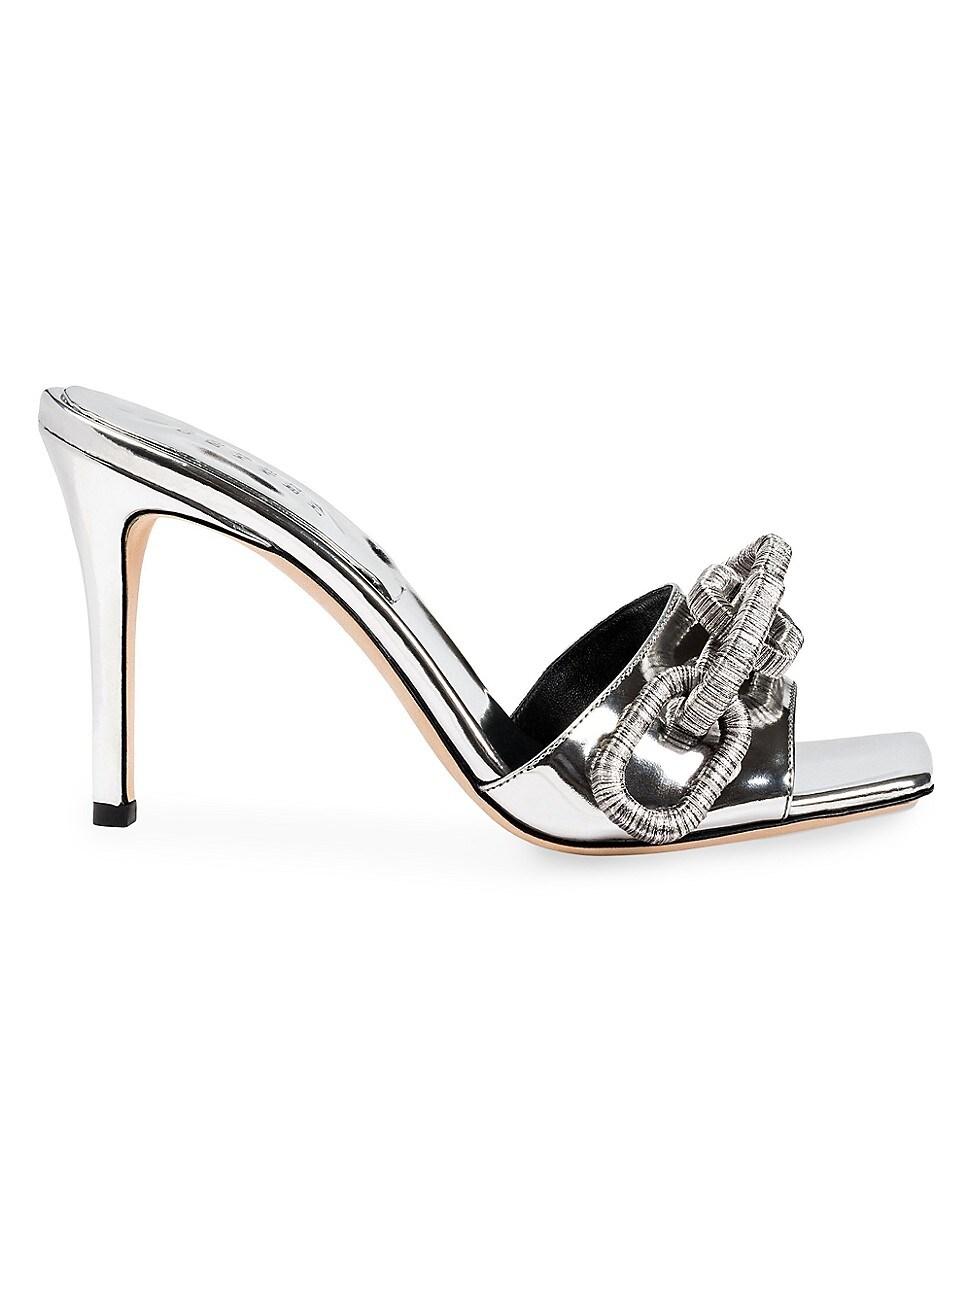 Serena Uziyel Catena Mirrored Leather Sandals in Metallic | Lyst